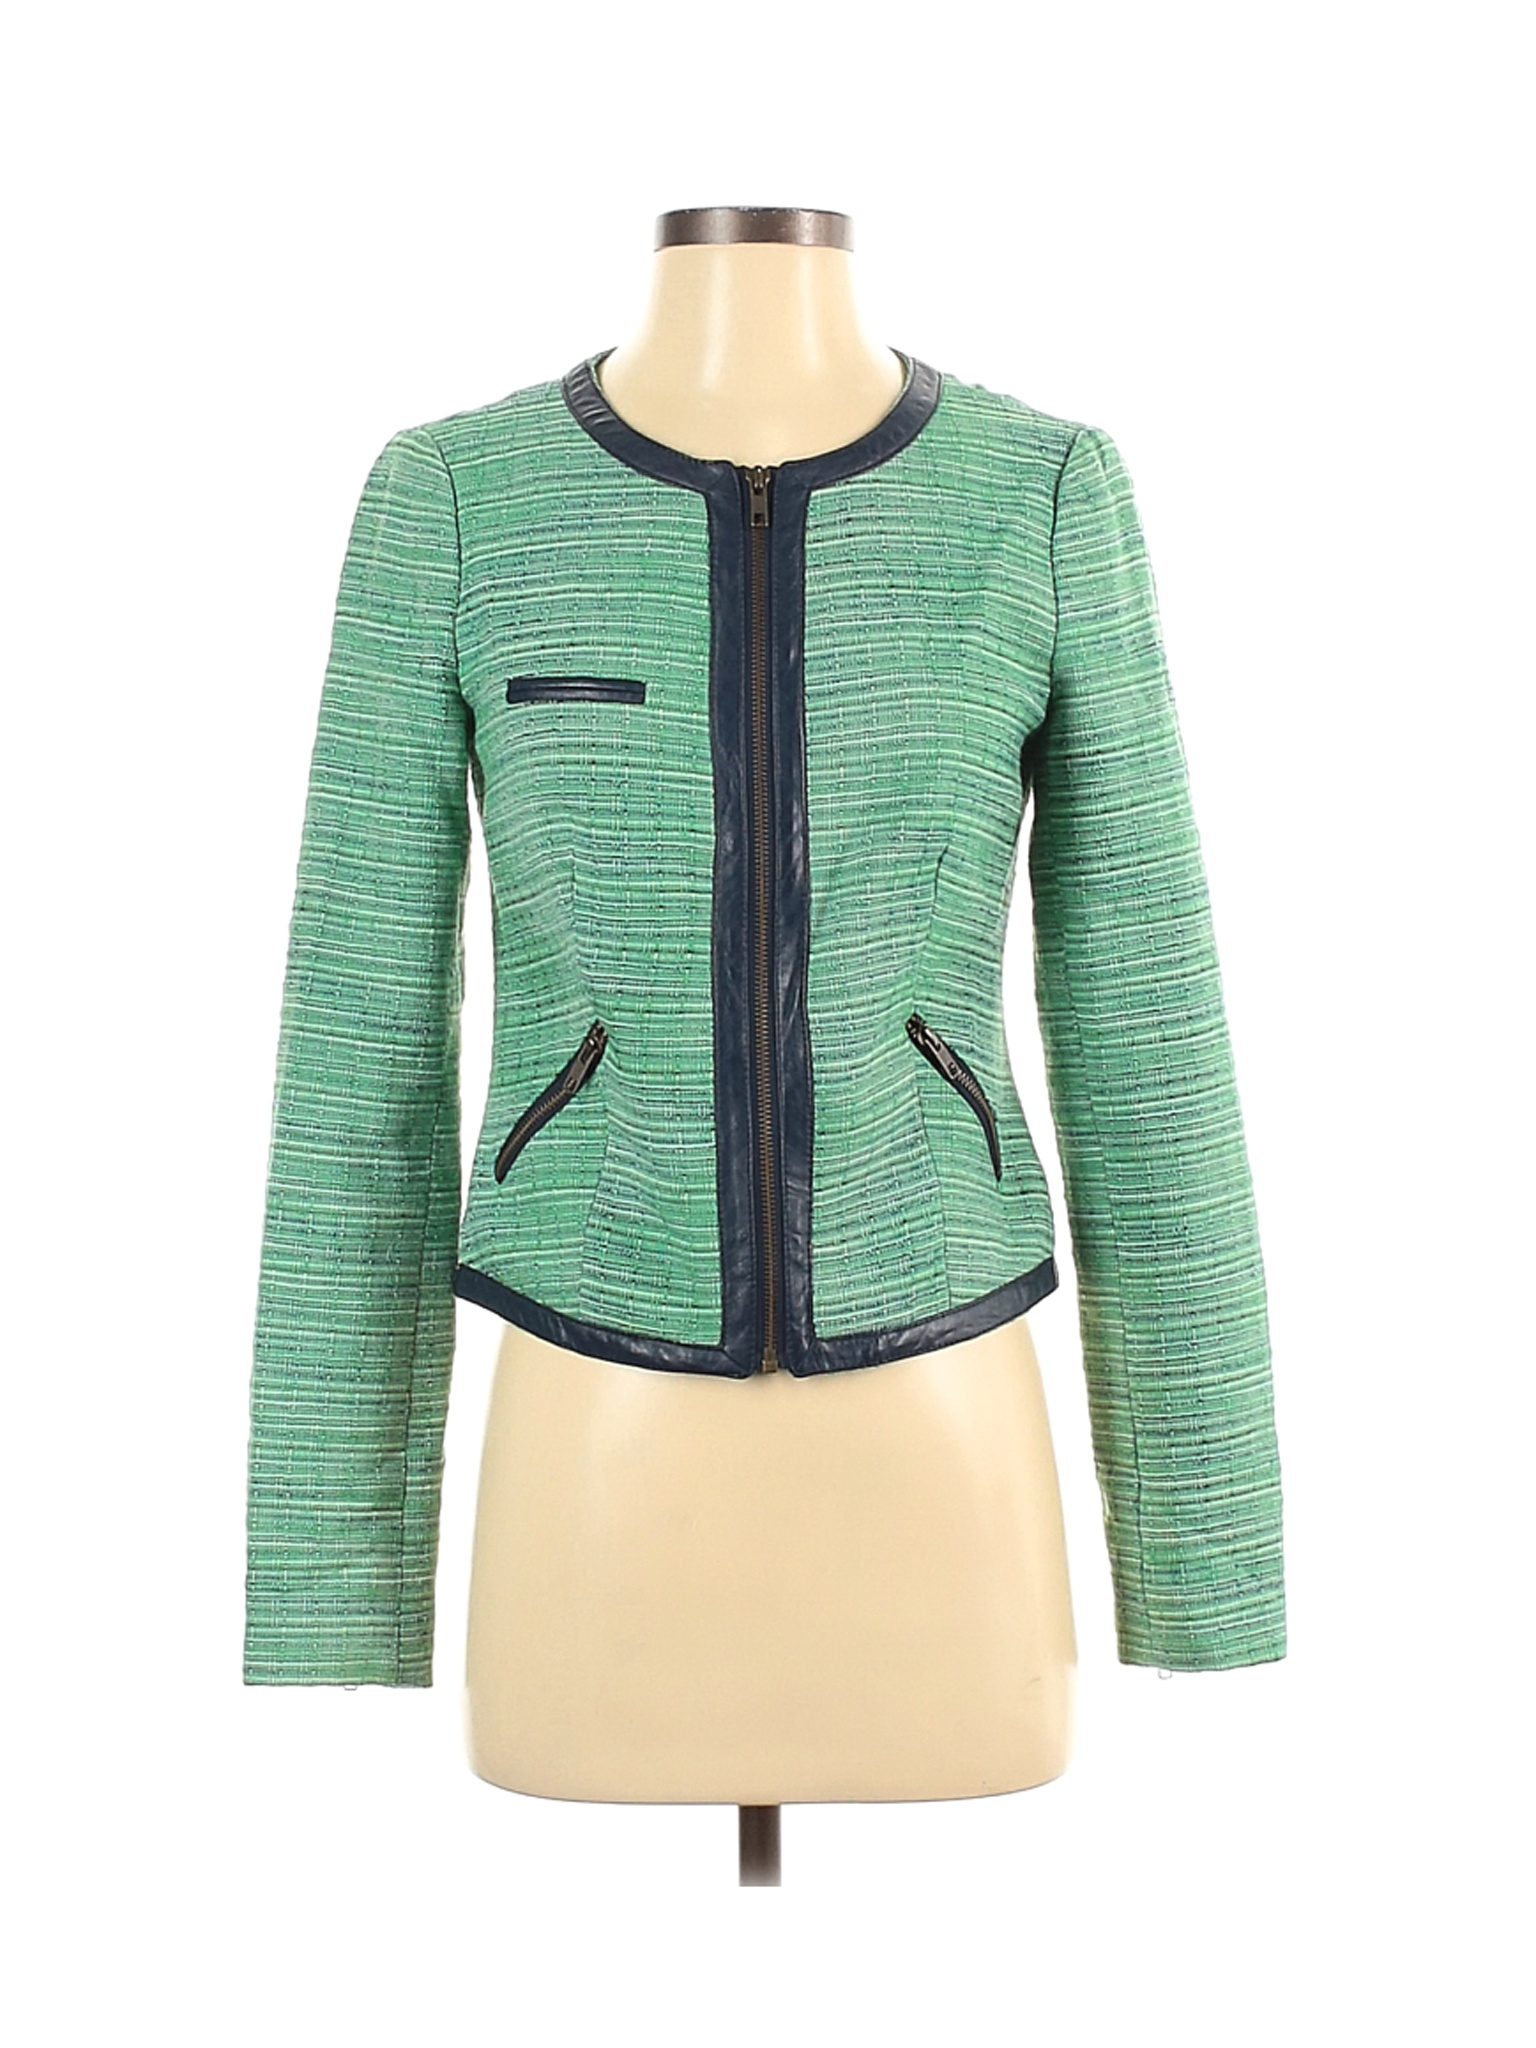 The Limited Women Green Jacket XS | eBay